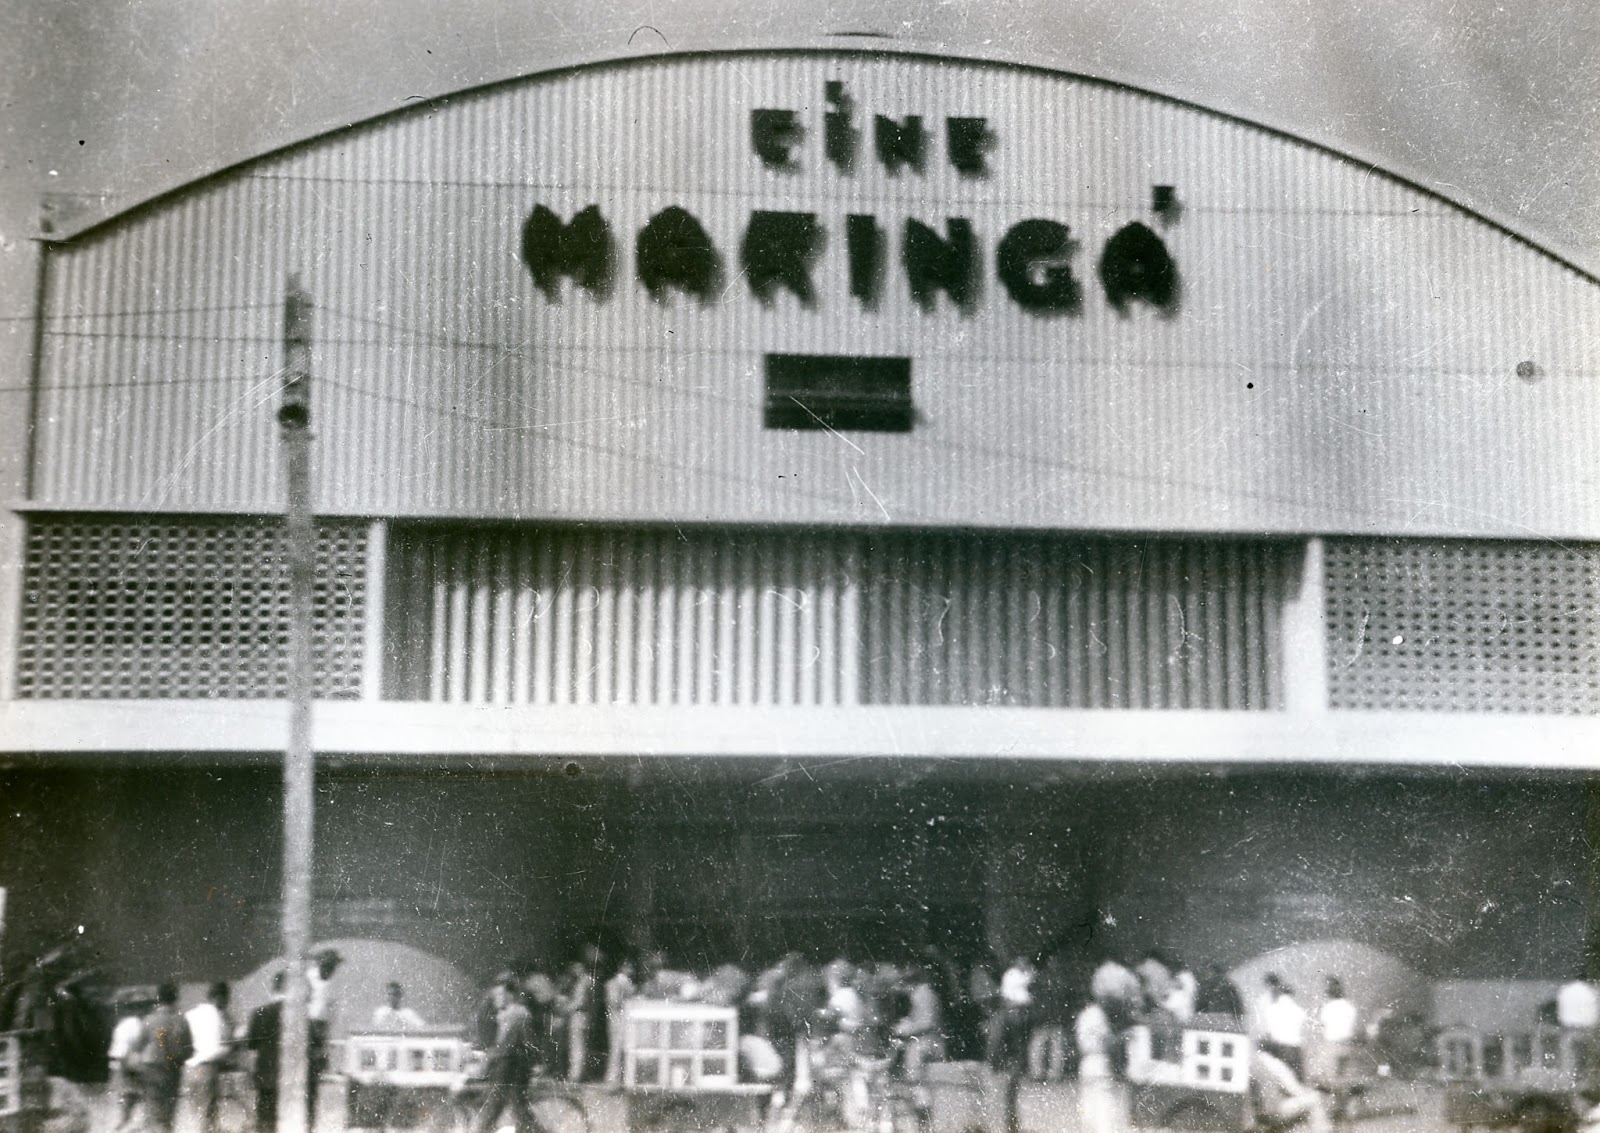 Fachada do Cine Maringá - Década de 1950